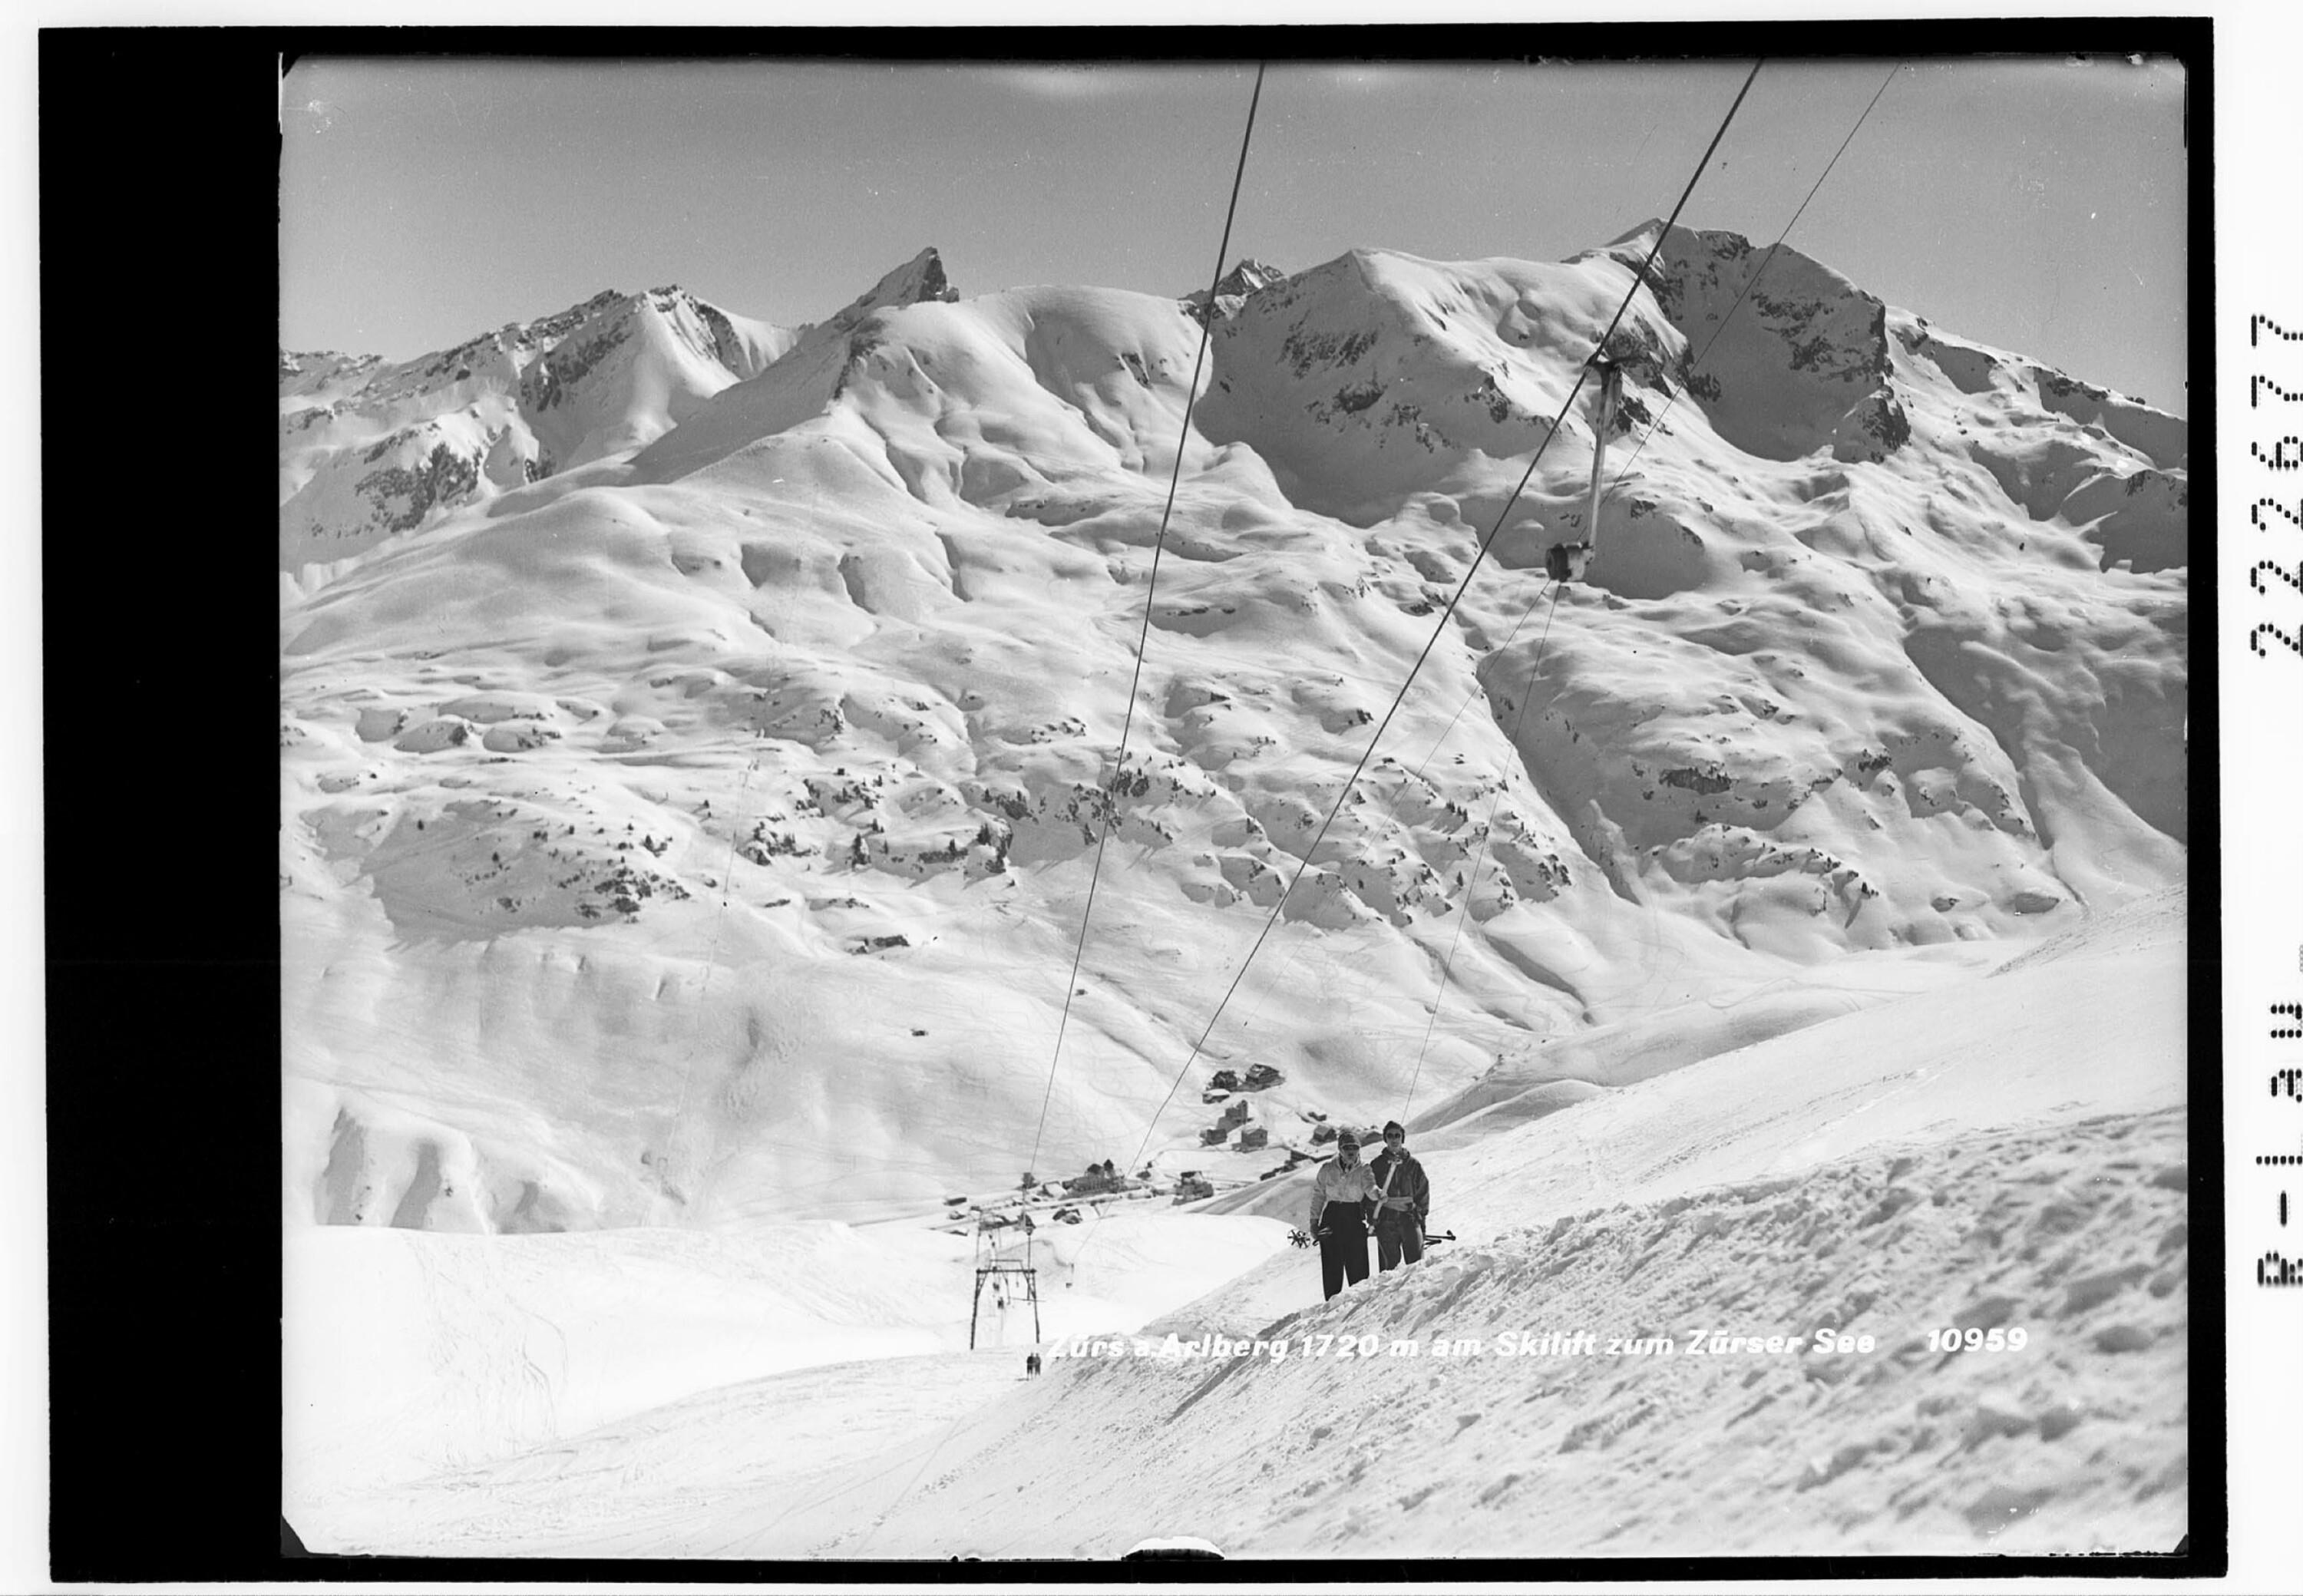 Zürs am Arlberg 1720 m / Skilift zum Zürsersee></div>


    <hr>
    <div class=